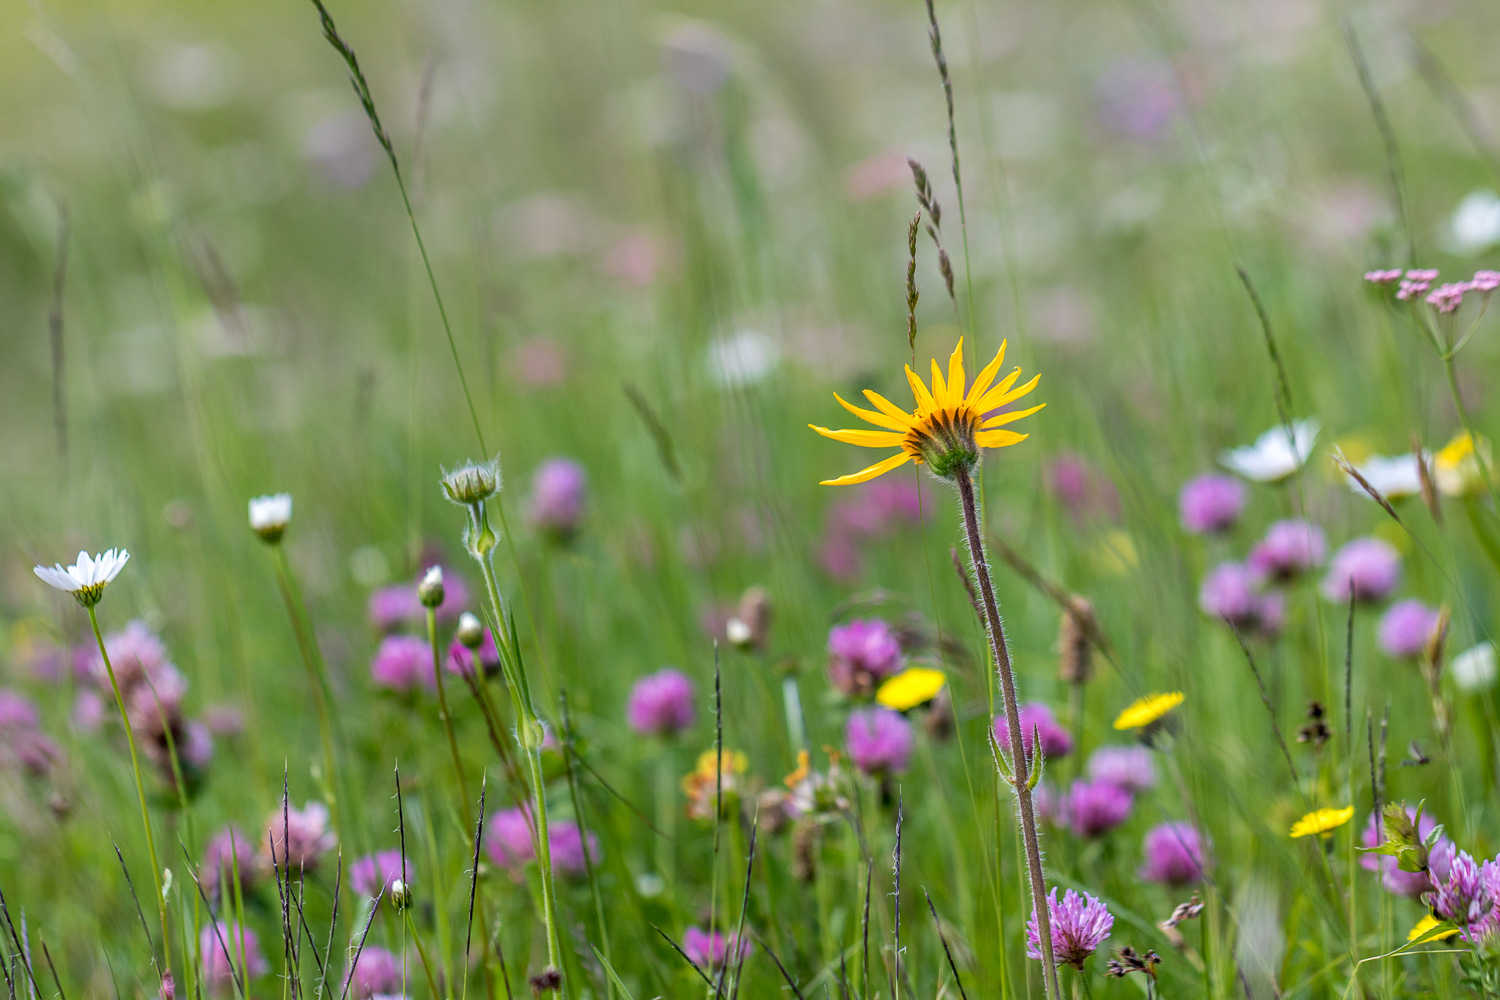 Wild flower meadows, Alpe de Siusi, Dolomites